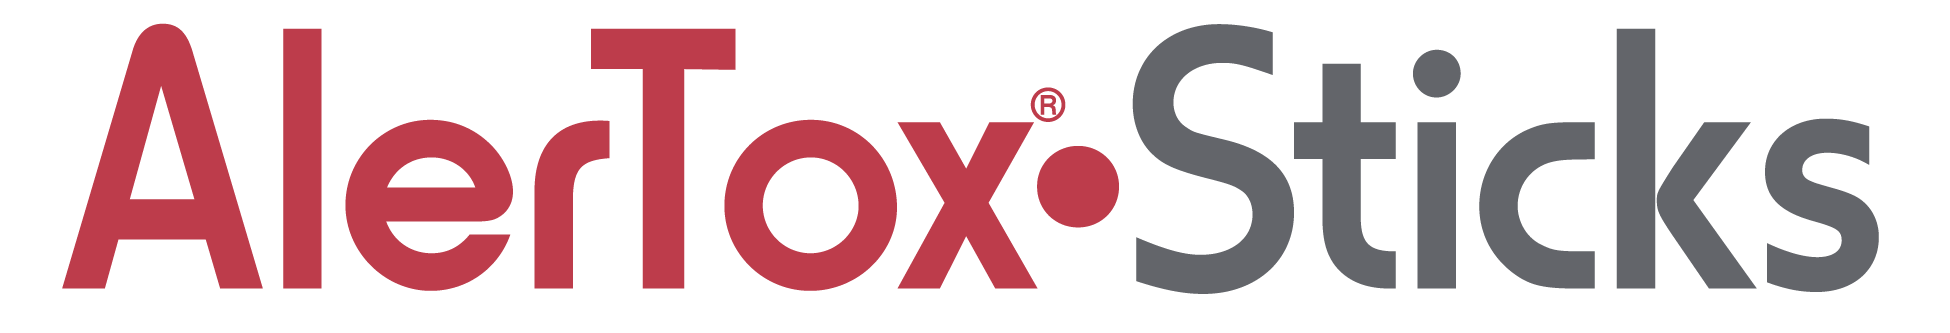 AlerToxSticks Logo